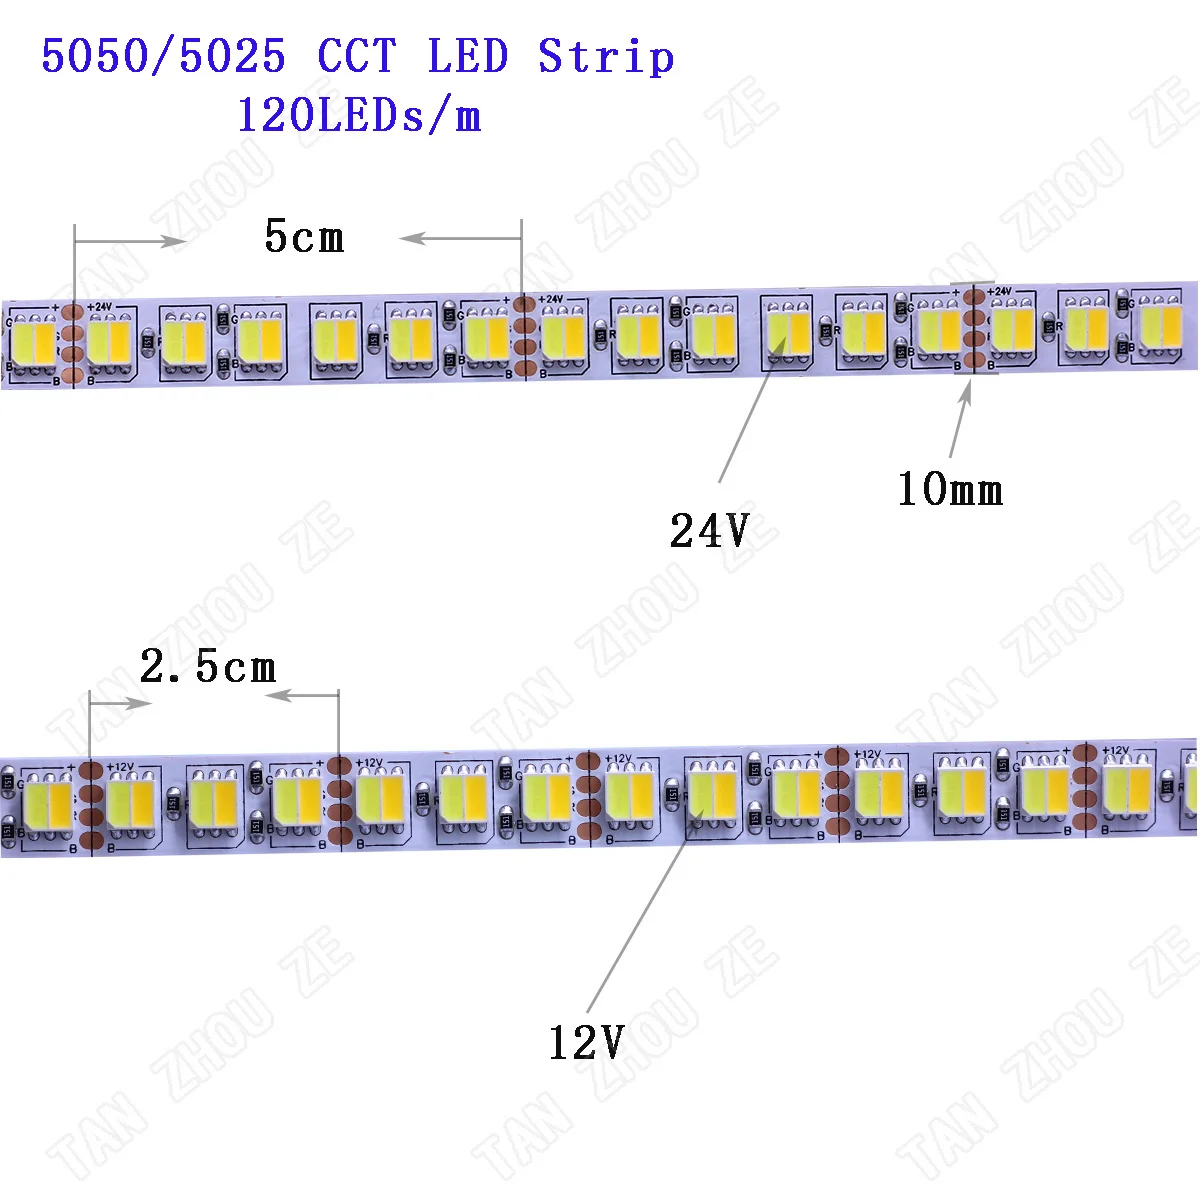 5M LED Strip Light 5054 5050 SMD 120led 60LED 240LED 2835 5630 12V DC Flexible LED Tape for Home Decoration CCT RGBWW RGBCCT RGB images - 6